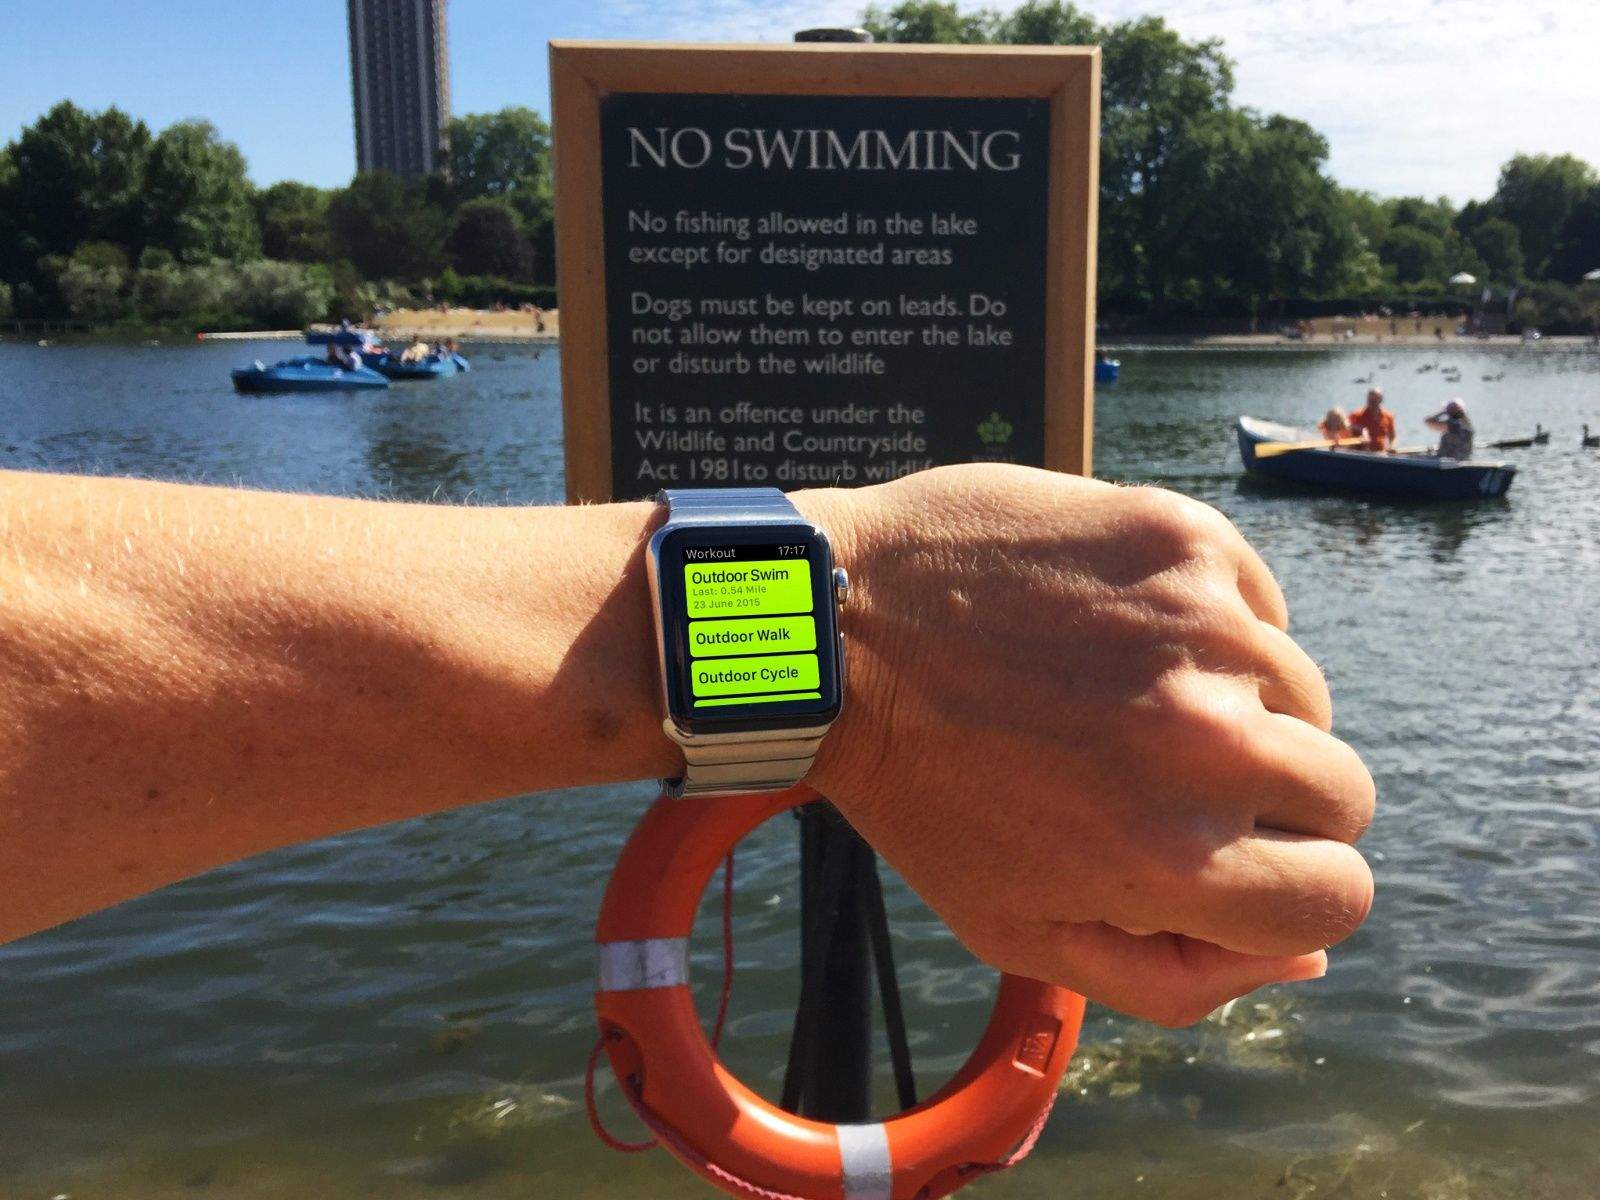 No swimming - Apple Watch is water resistant but not waterproof